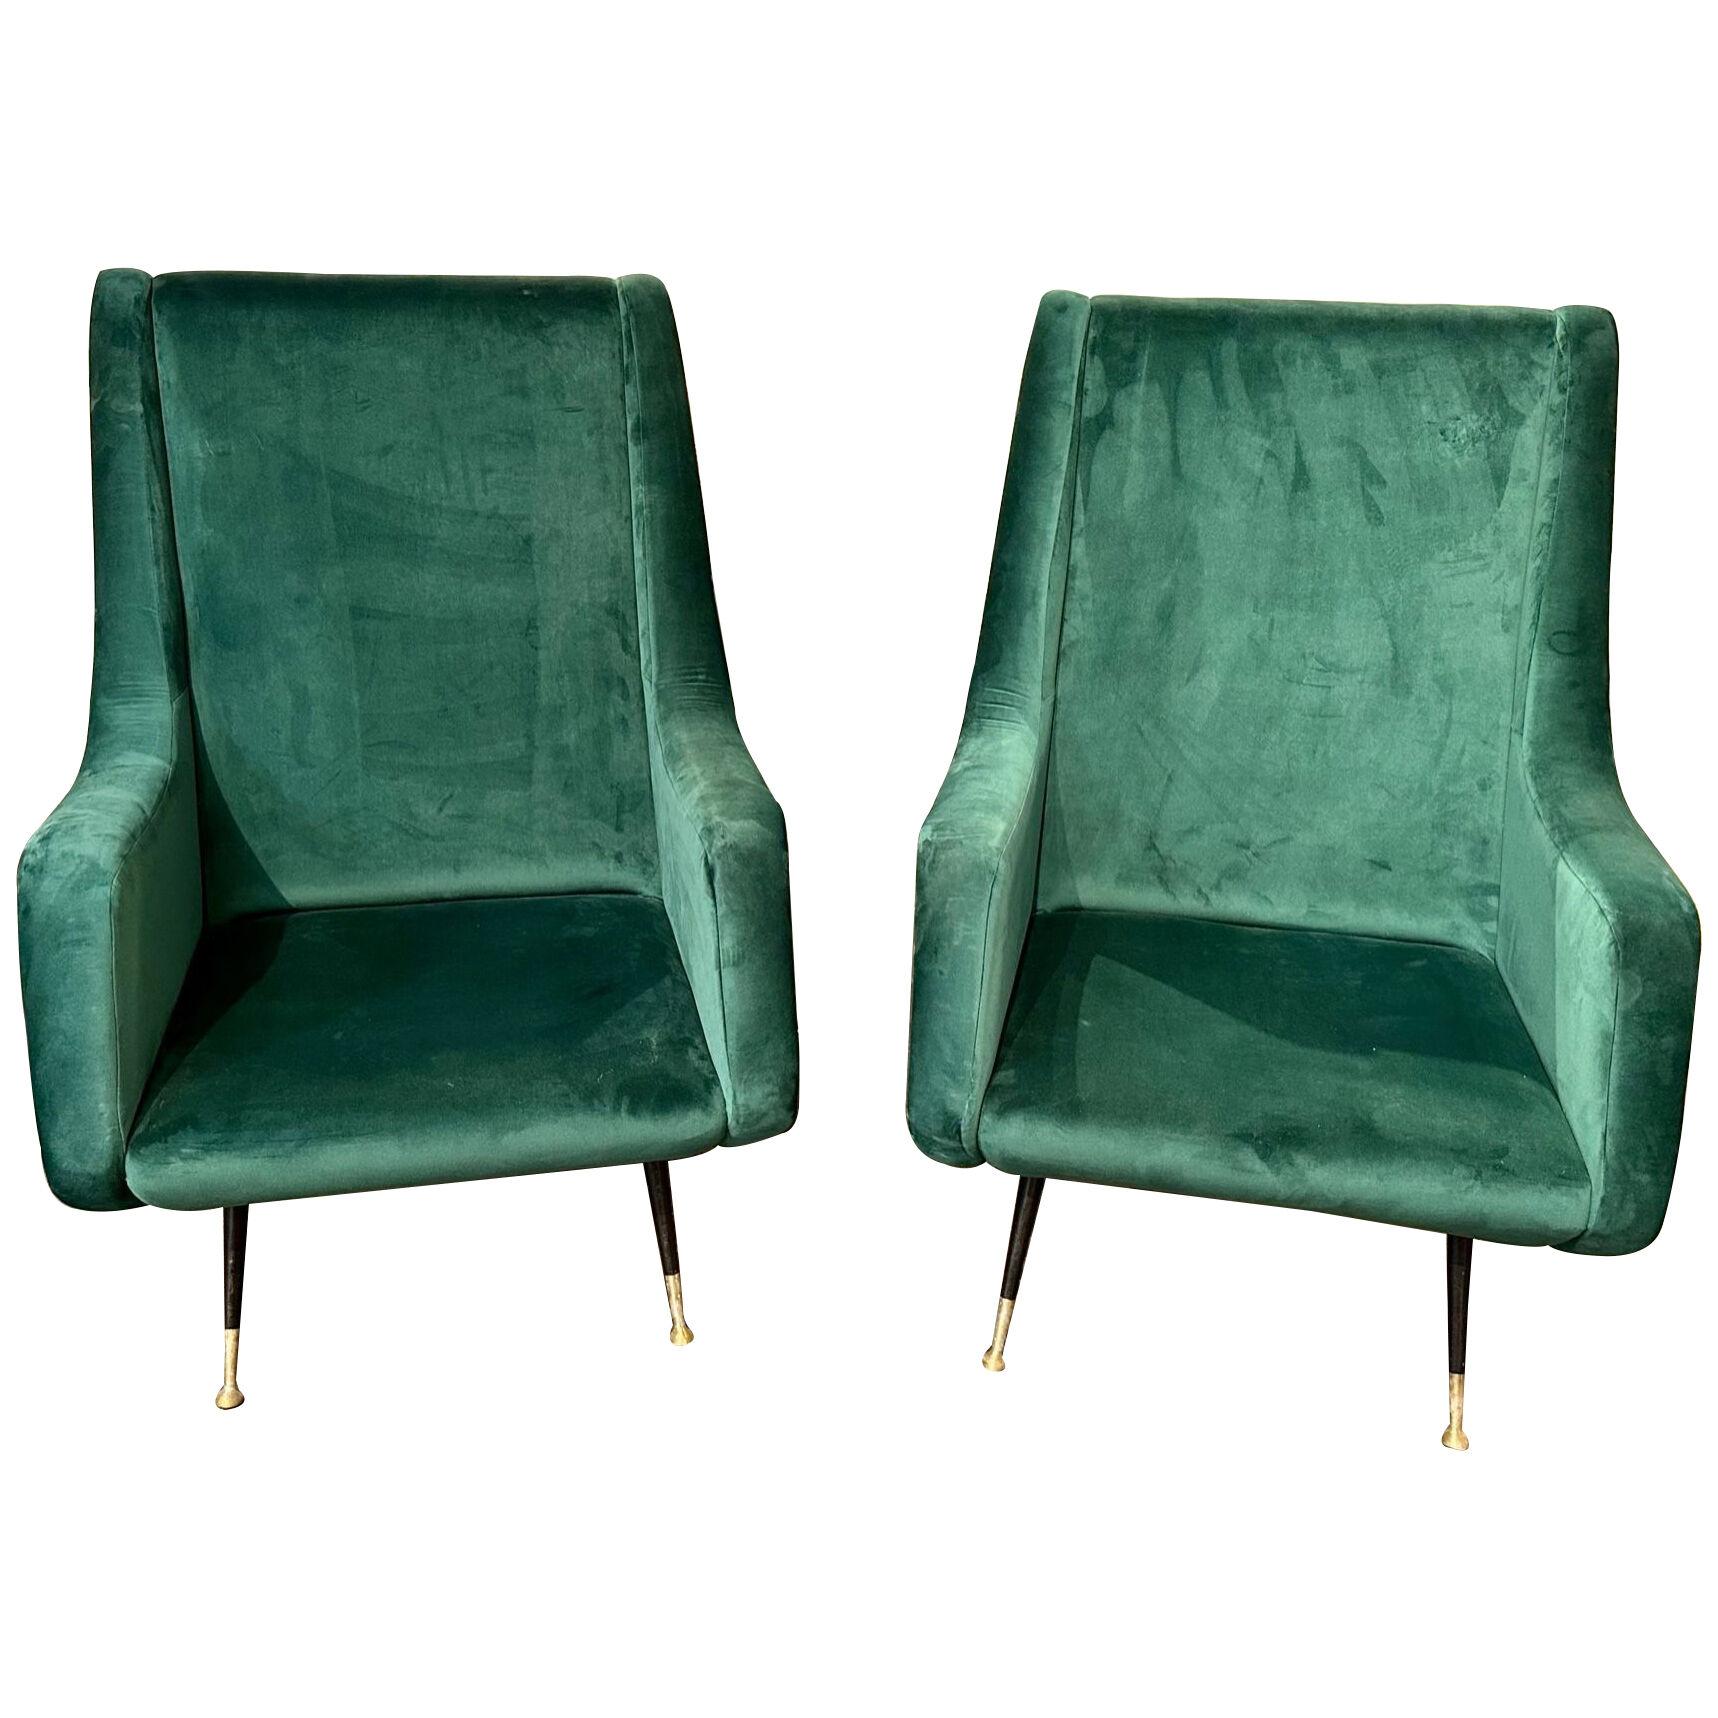 Pair of Italian Green Velvet Mid Century Modern Chairs